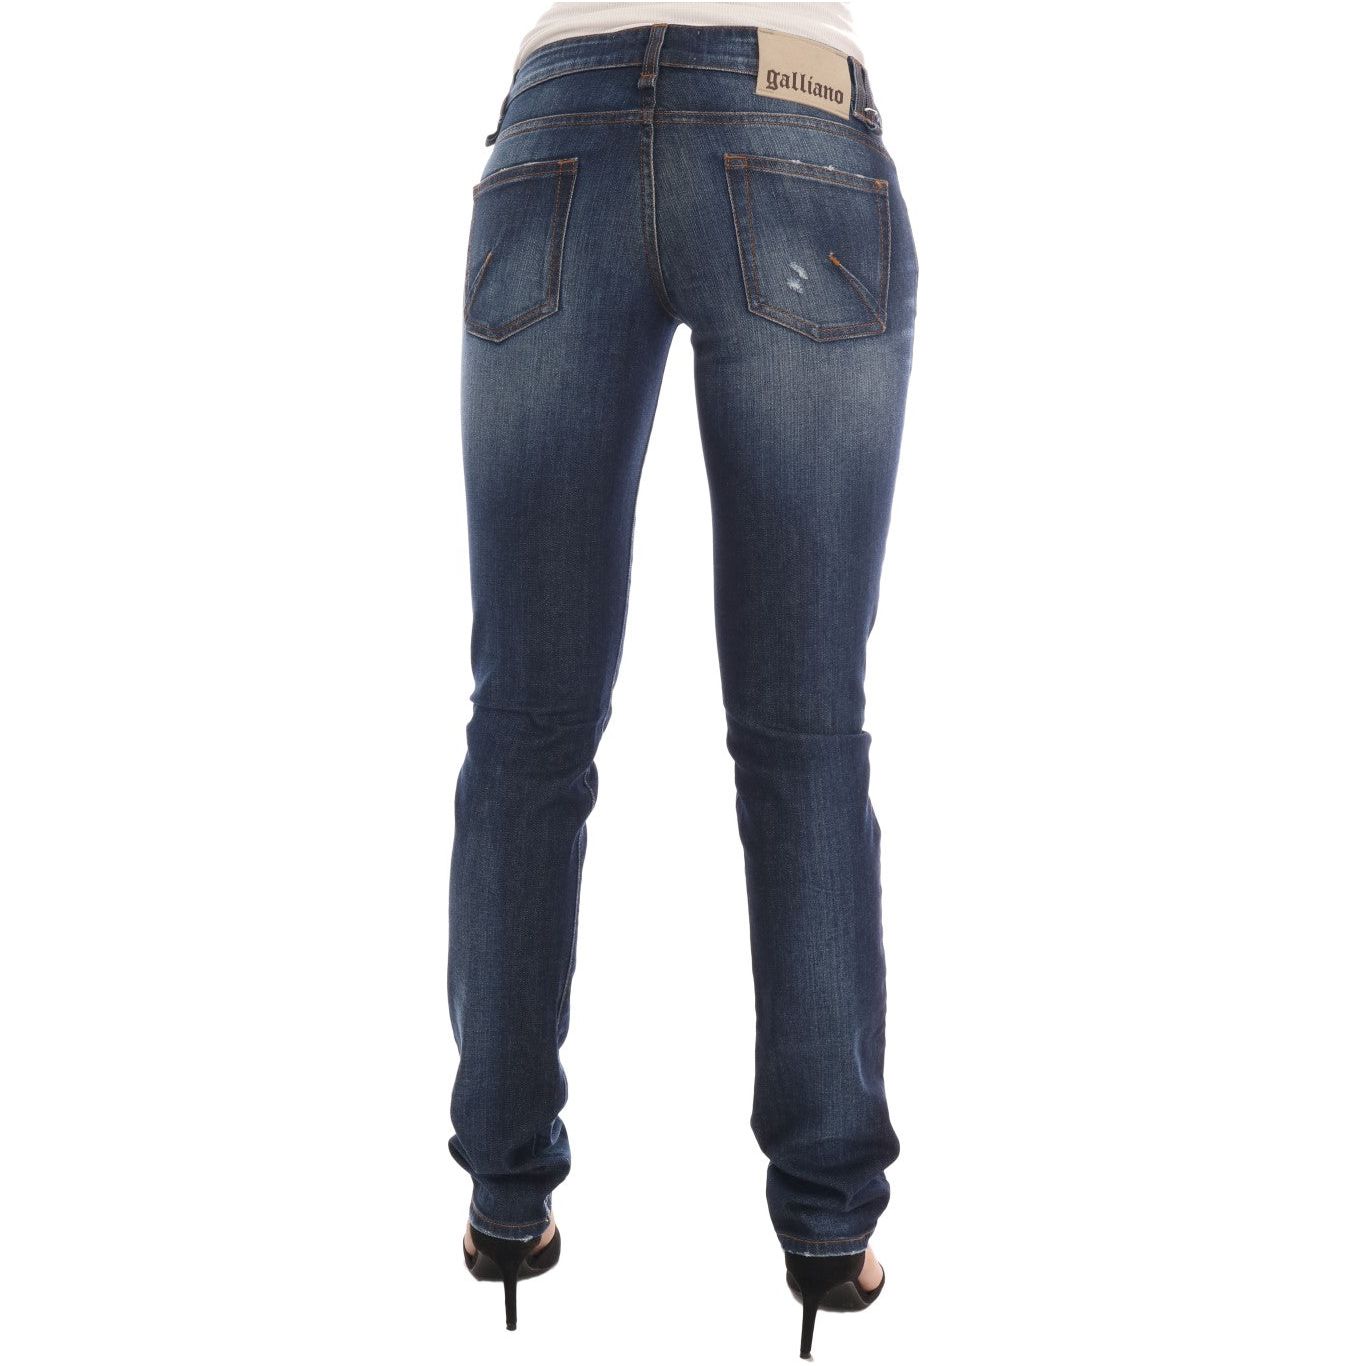 John Galliano Stylish Skinny Low Rise Denim Jeans blue-wash-cotton-stretch-skinny-low-jeans 490796-blue-wash-cotton-stretch-skinny-low-jeans-2.jpg